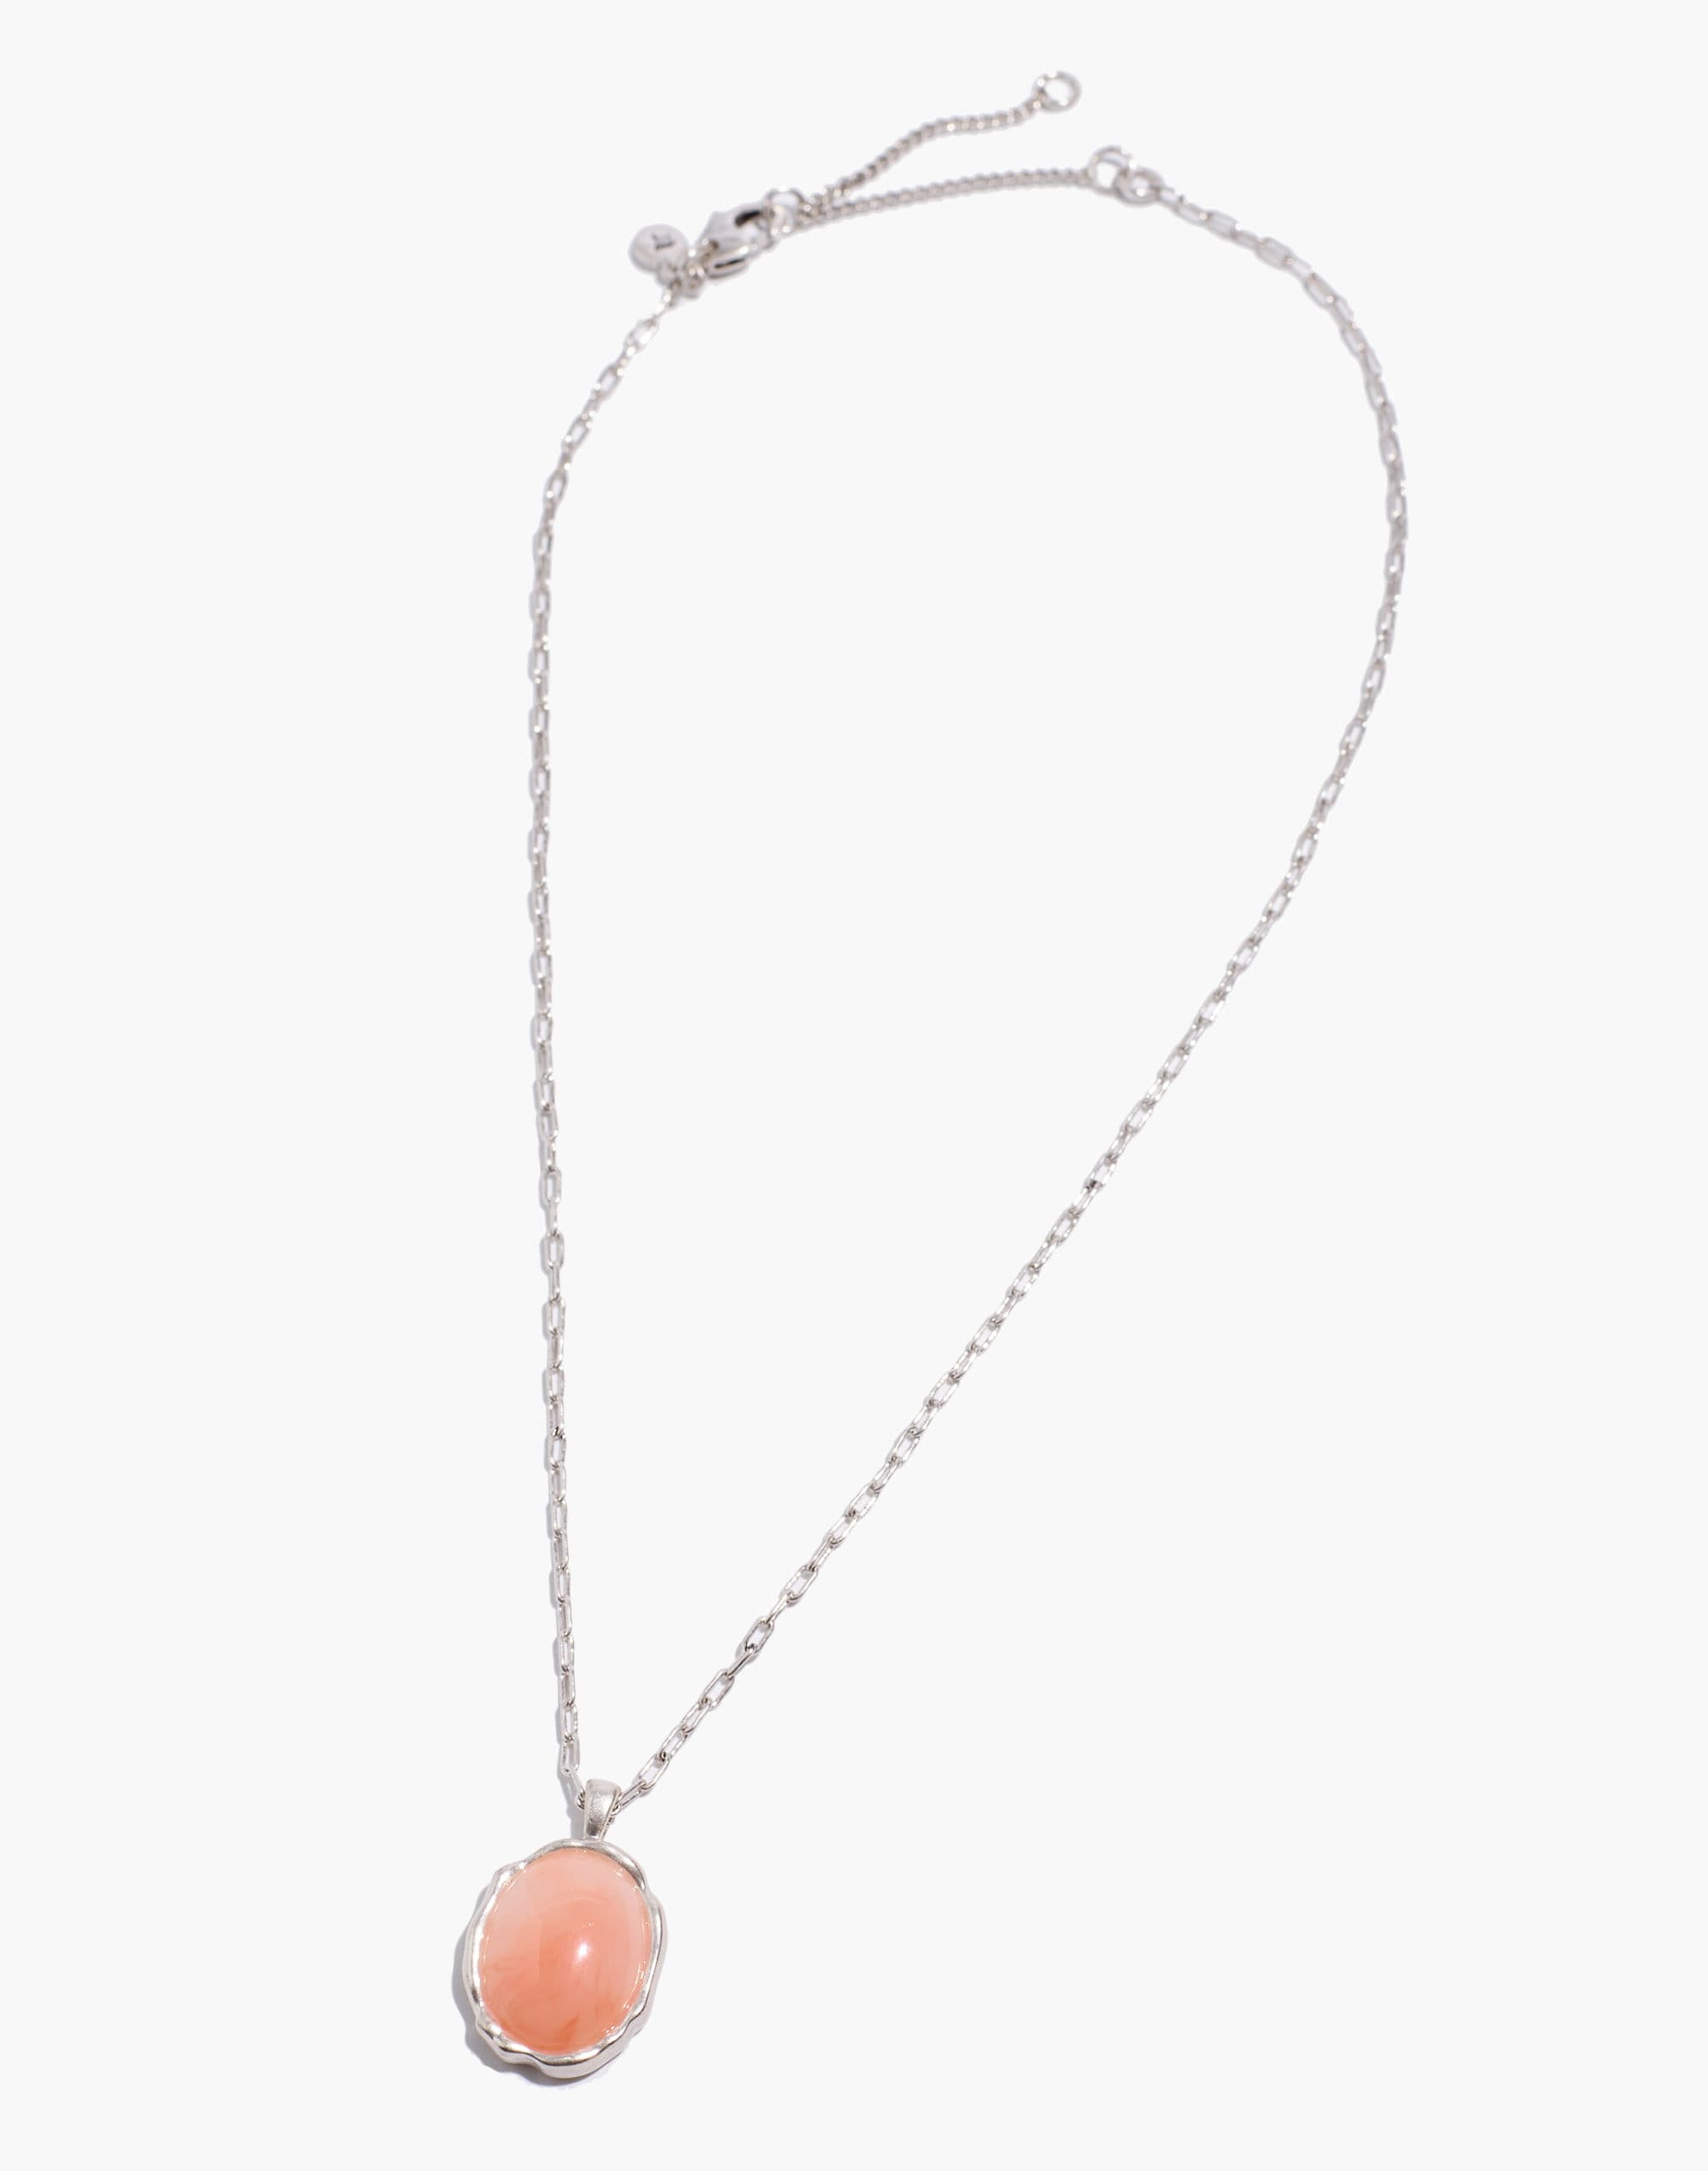 Coral Stone Pendant Necklace